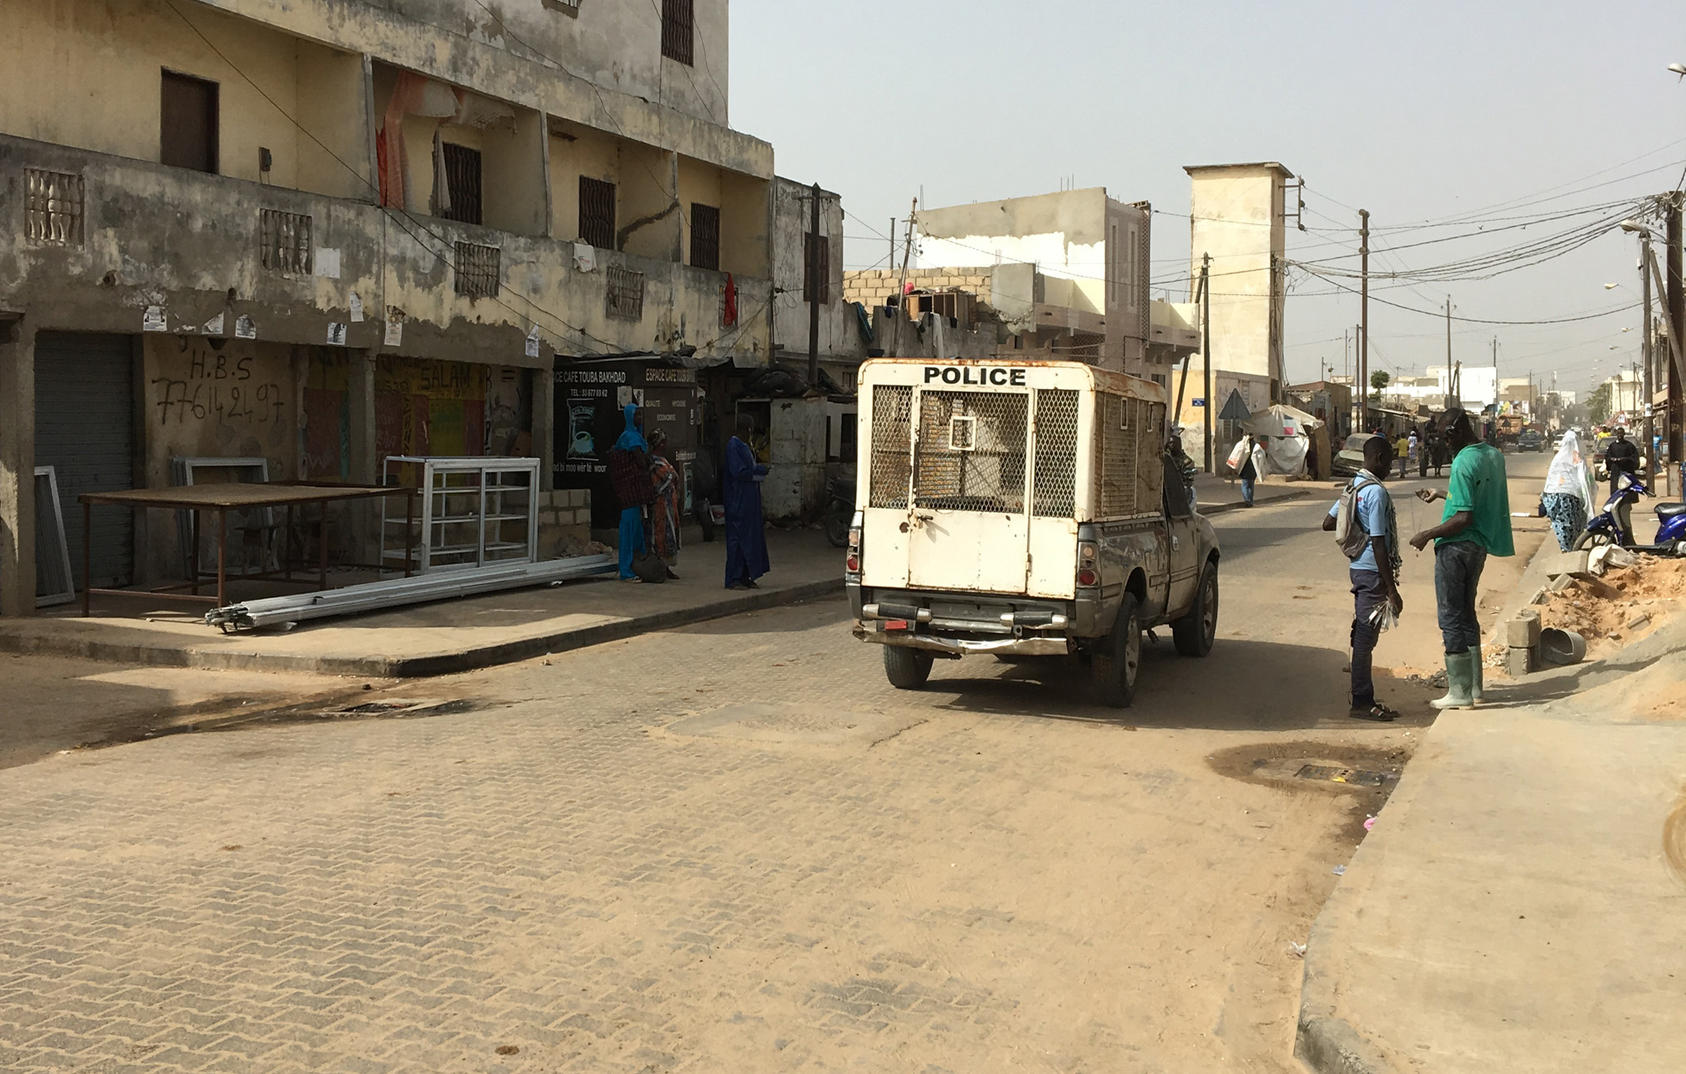 Police vehicle in Senegal